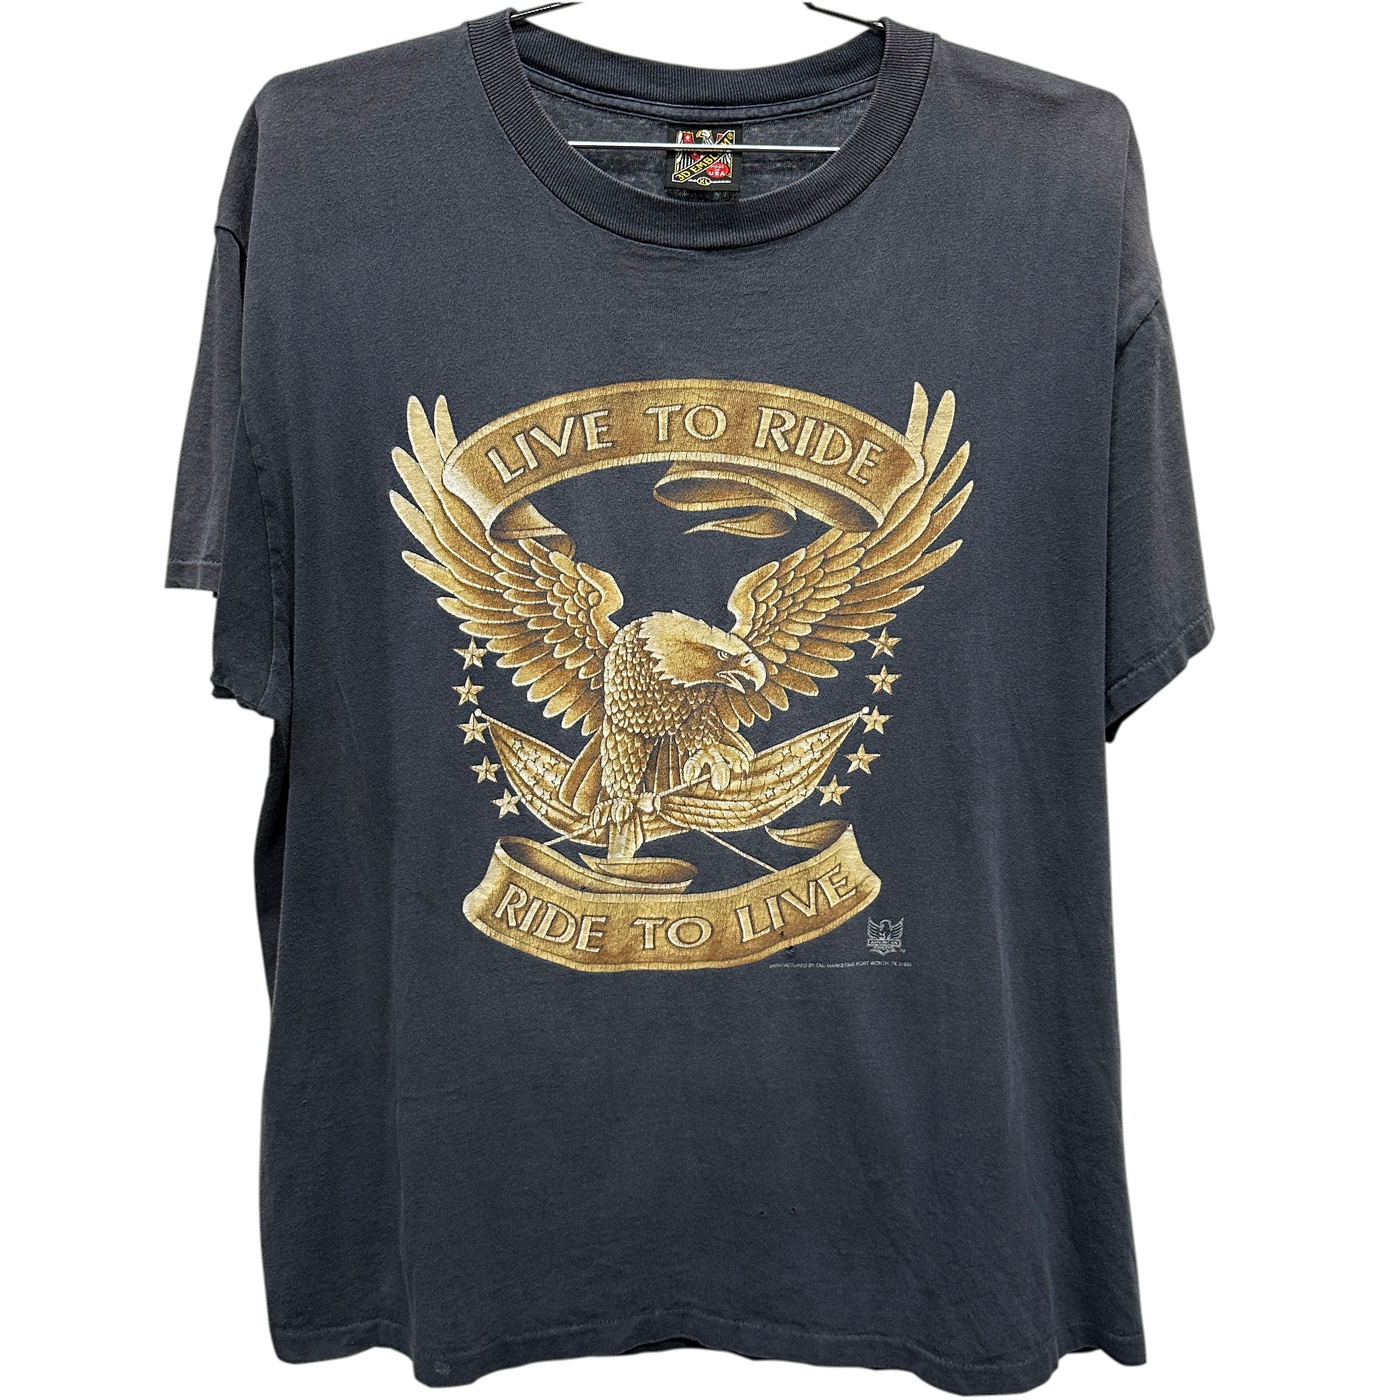 '99 Gold Eagle "Live to Ride" Black Harley Davidson T-Shirt sz XL